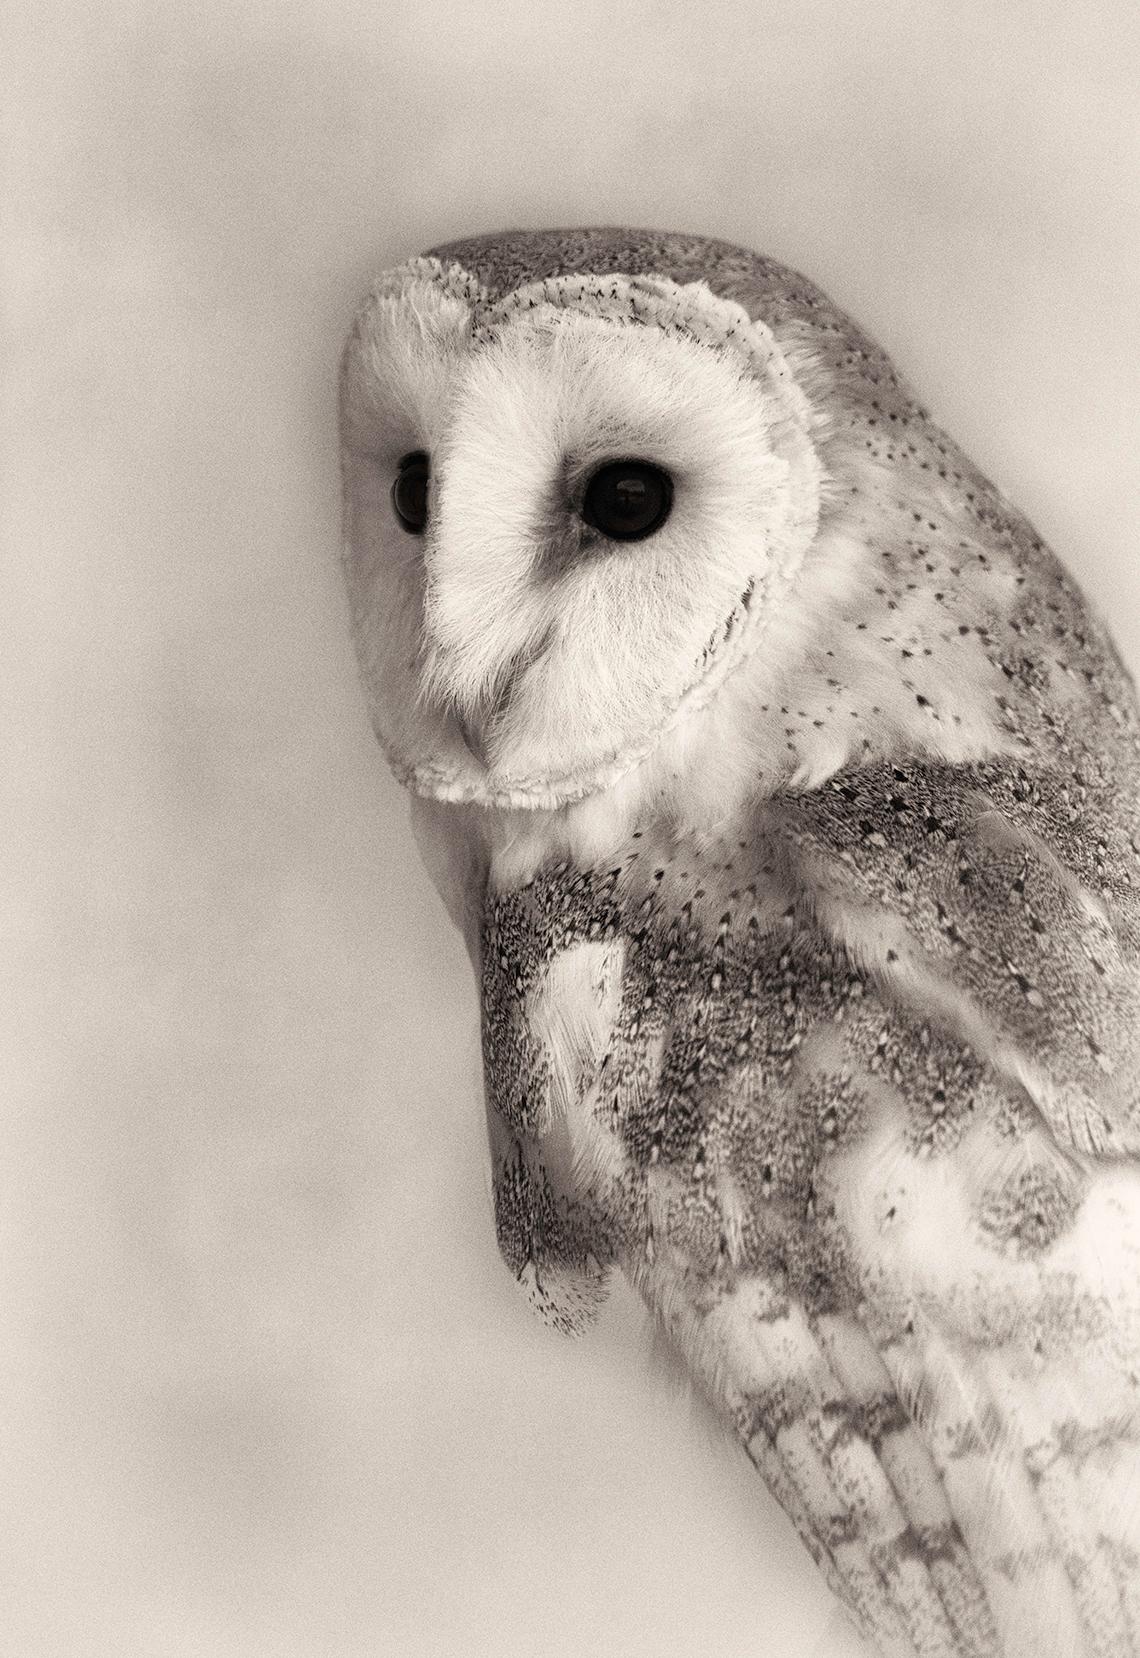 Beth Moon Animal Print – Barn Owl Porträt, Fotografie in limitierter Auflage, signiert, Platin/Palladiumdruck